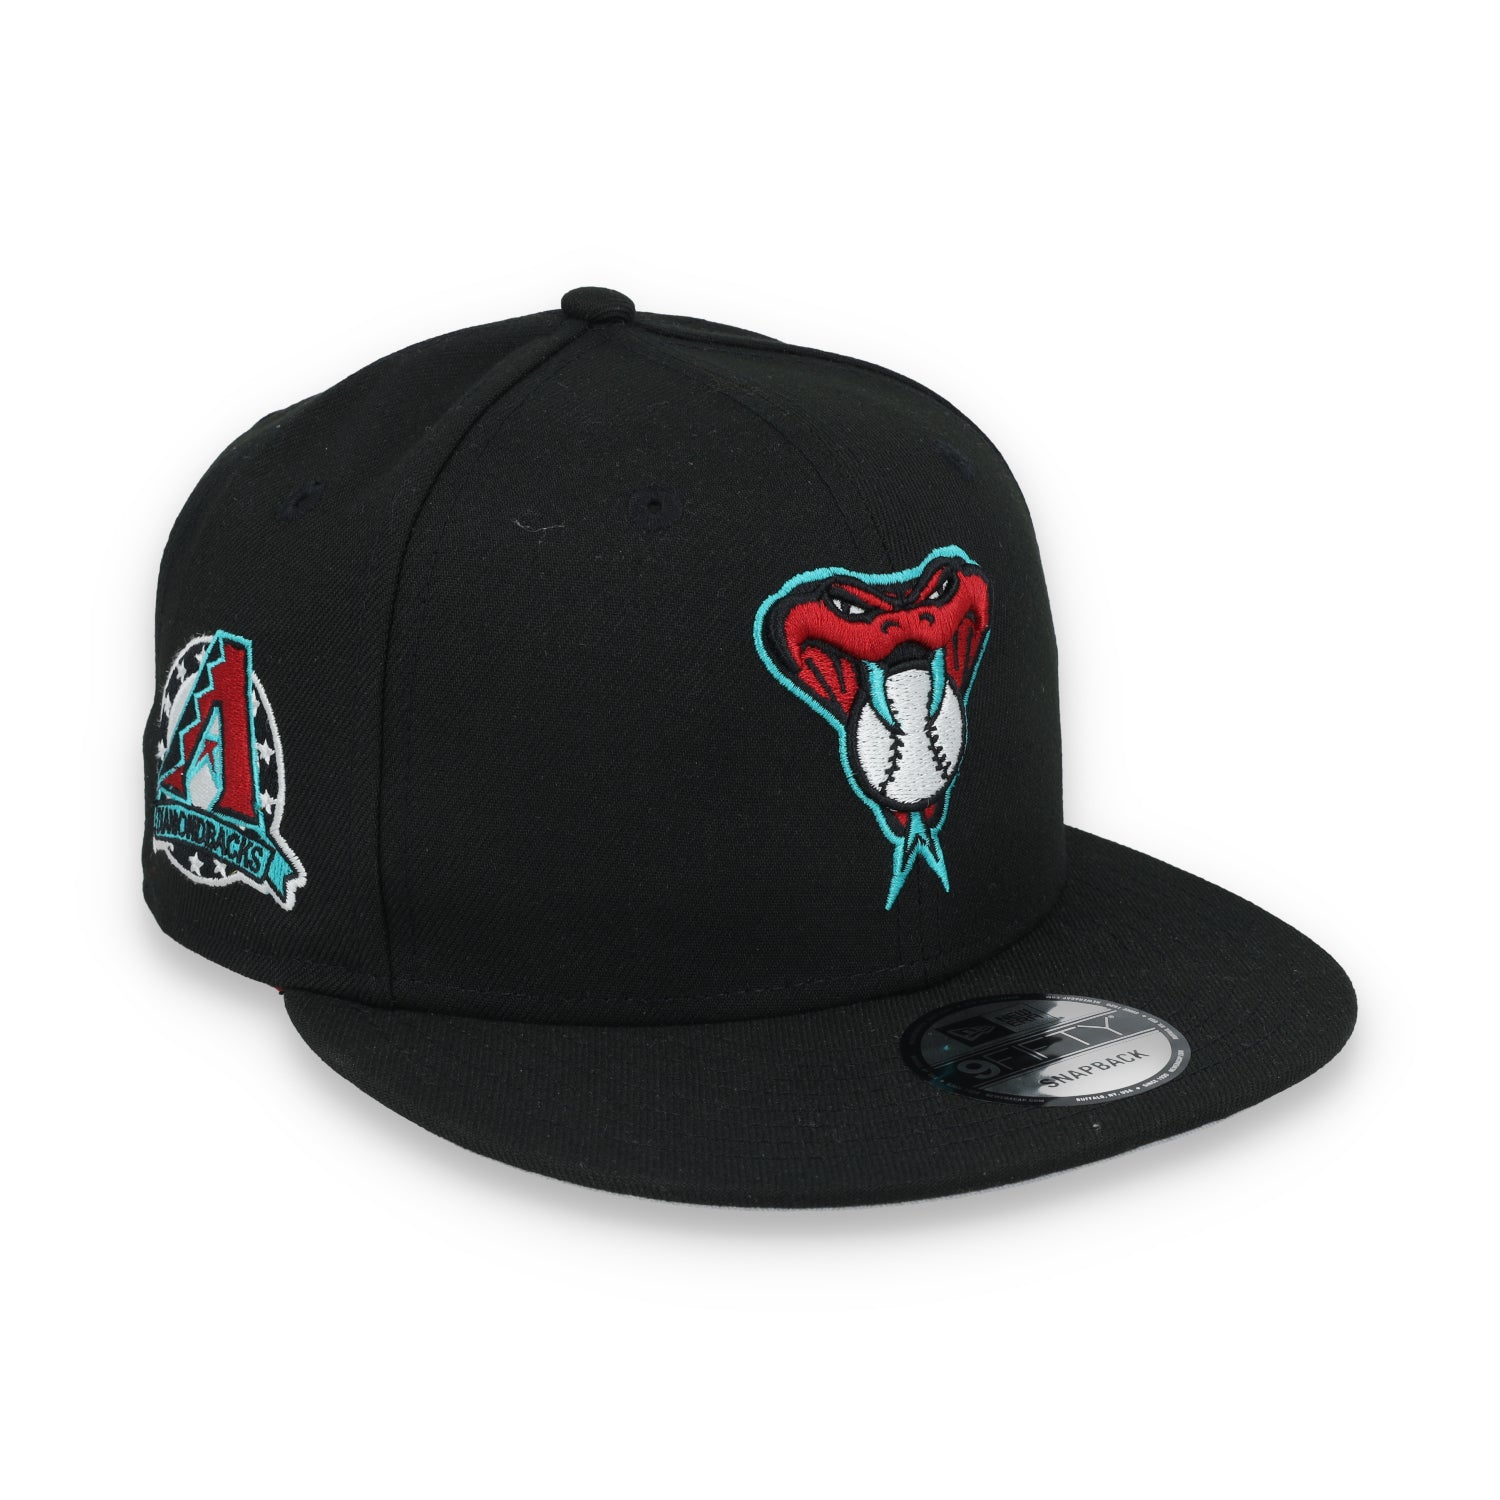 New Era Arizona Diamondbacks Patch E3 9FIFTY Snapback Hat